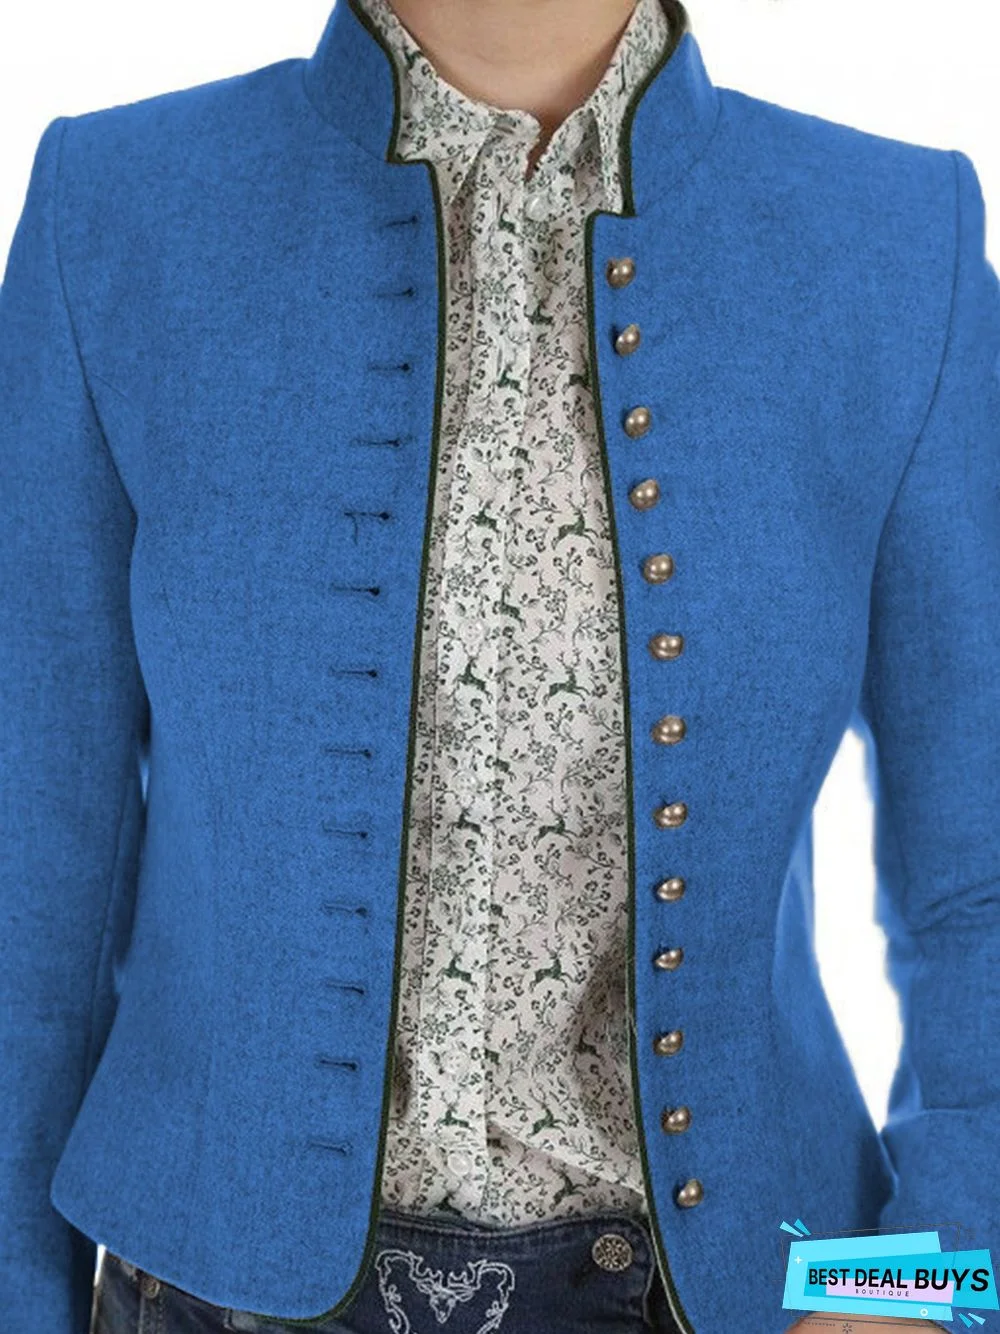 Solid Buttoned Vintage Blazer Jacket Stand Collar